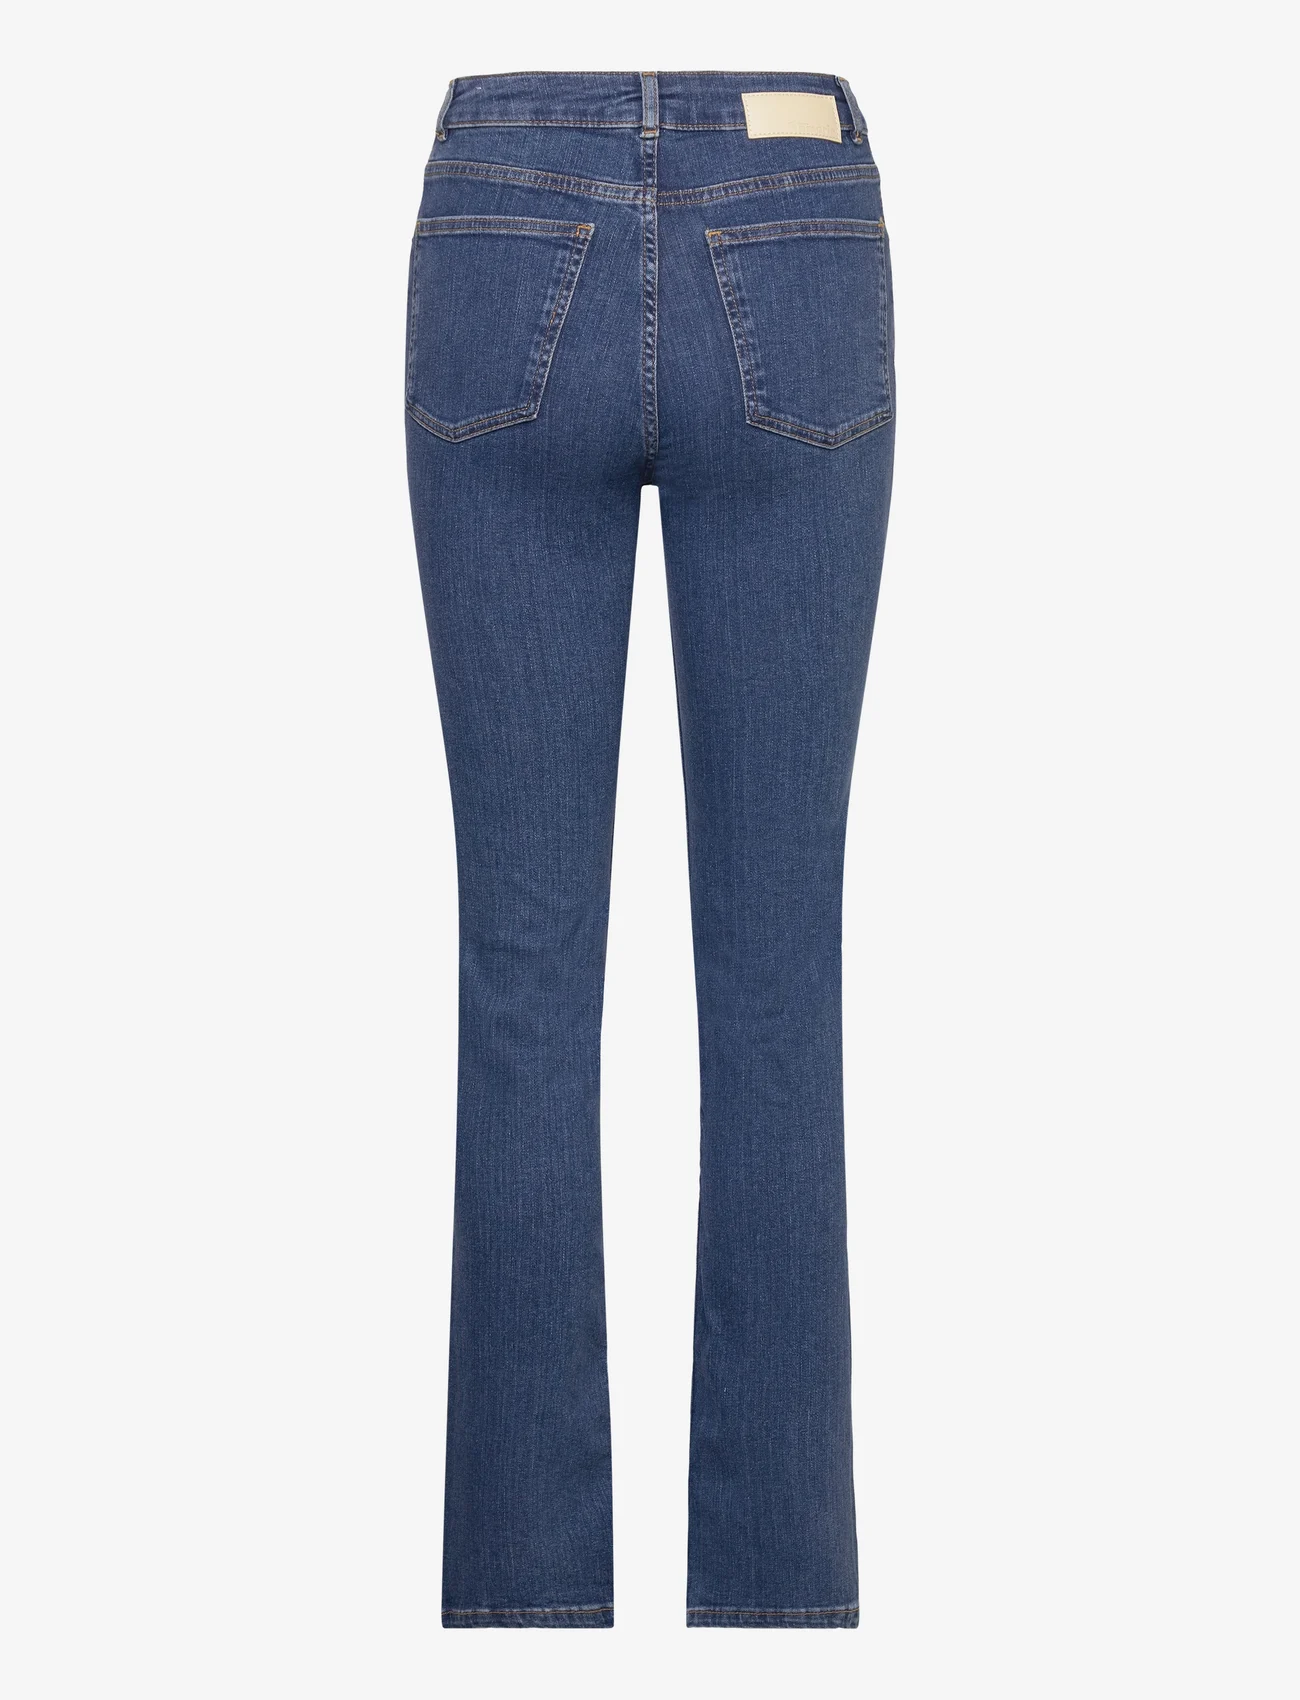 Tamaris Apparel - AGBOR slim jeans - flared jeans - mid blue denim - 1